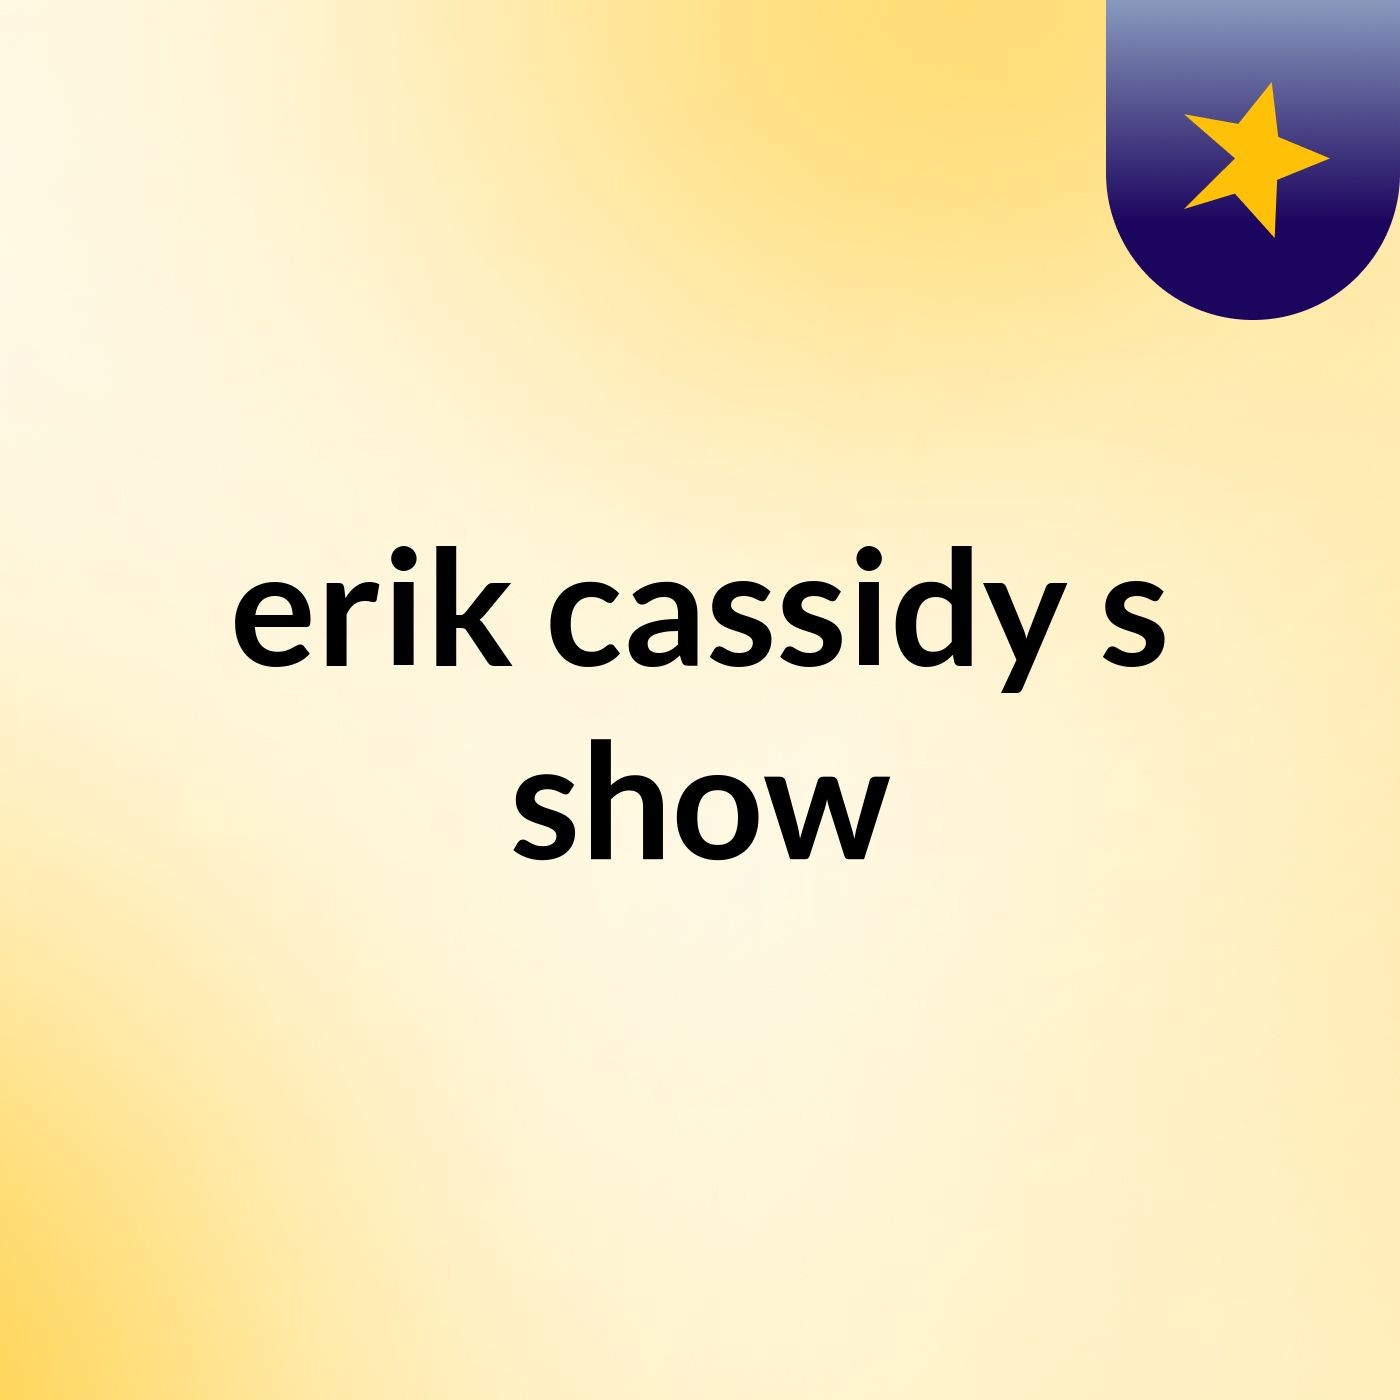 erik cassidy's show